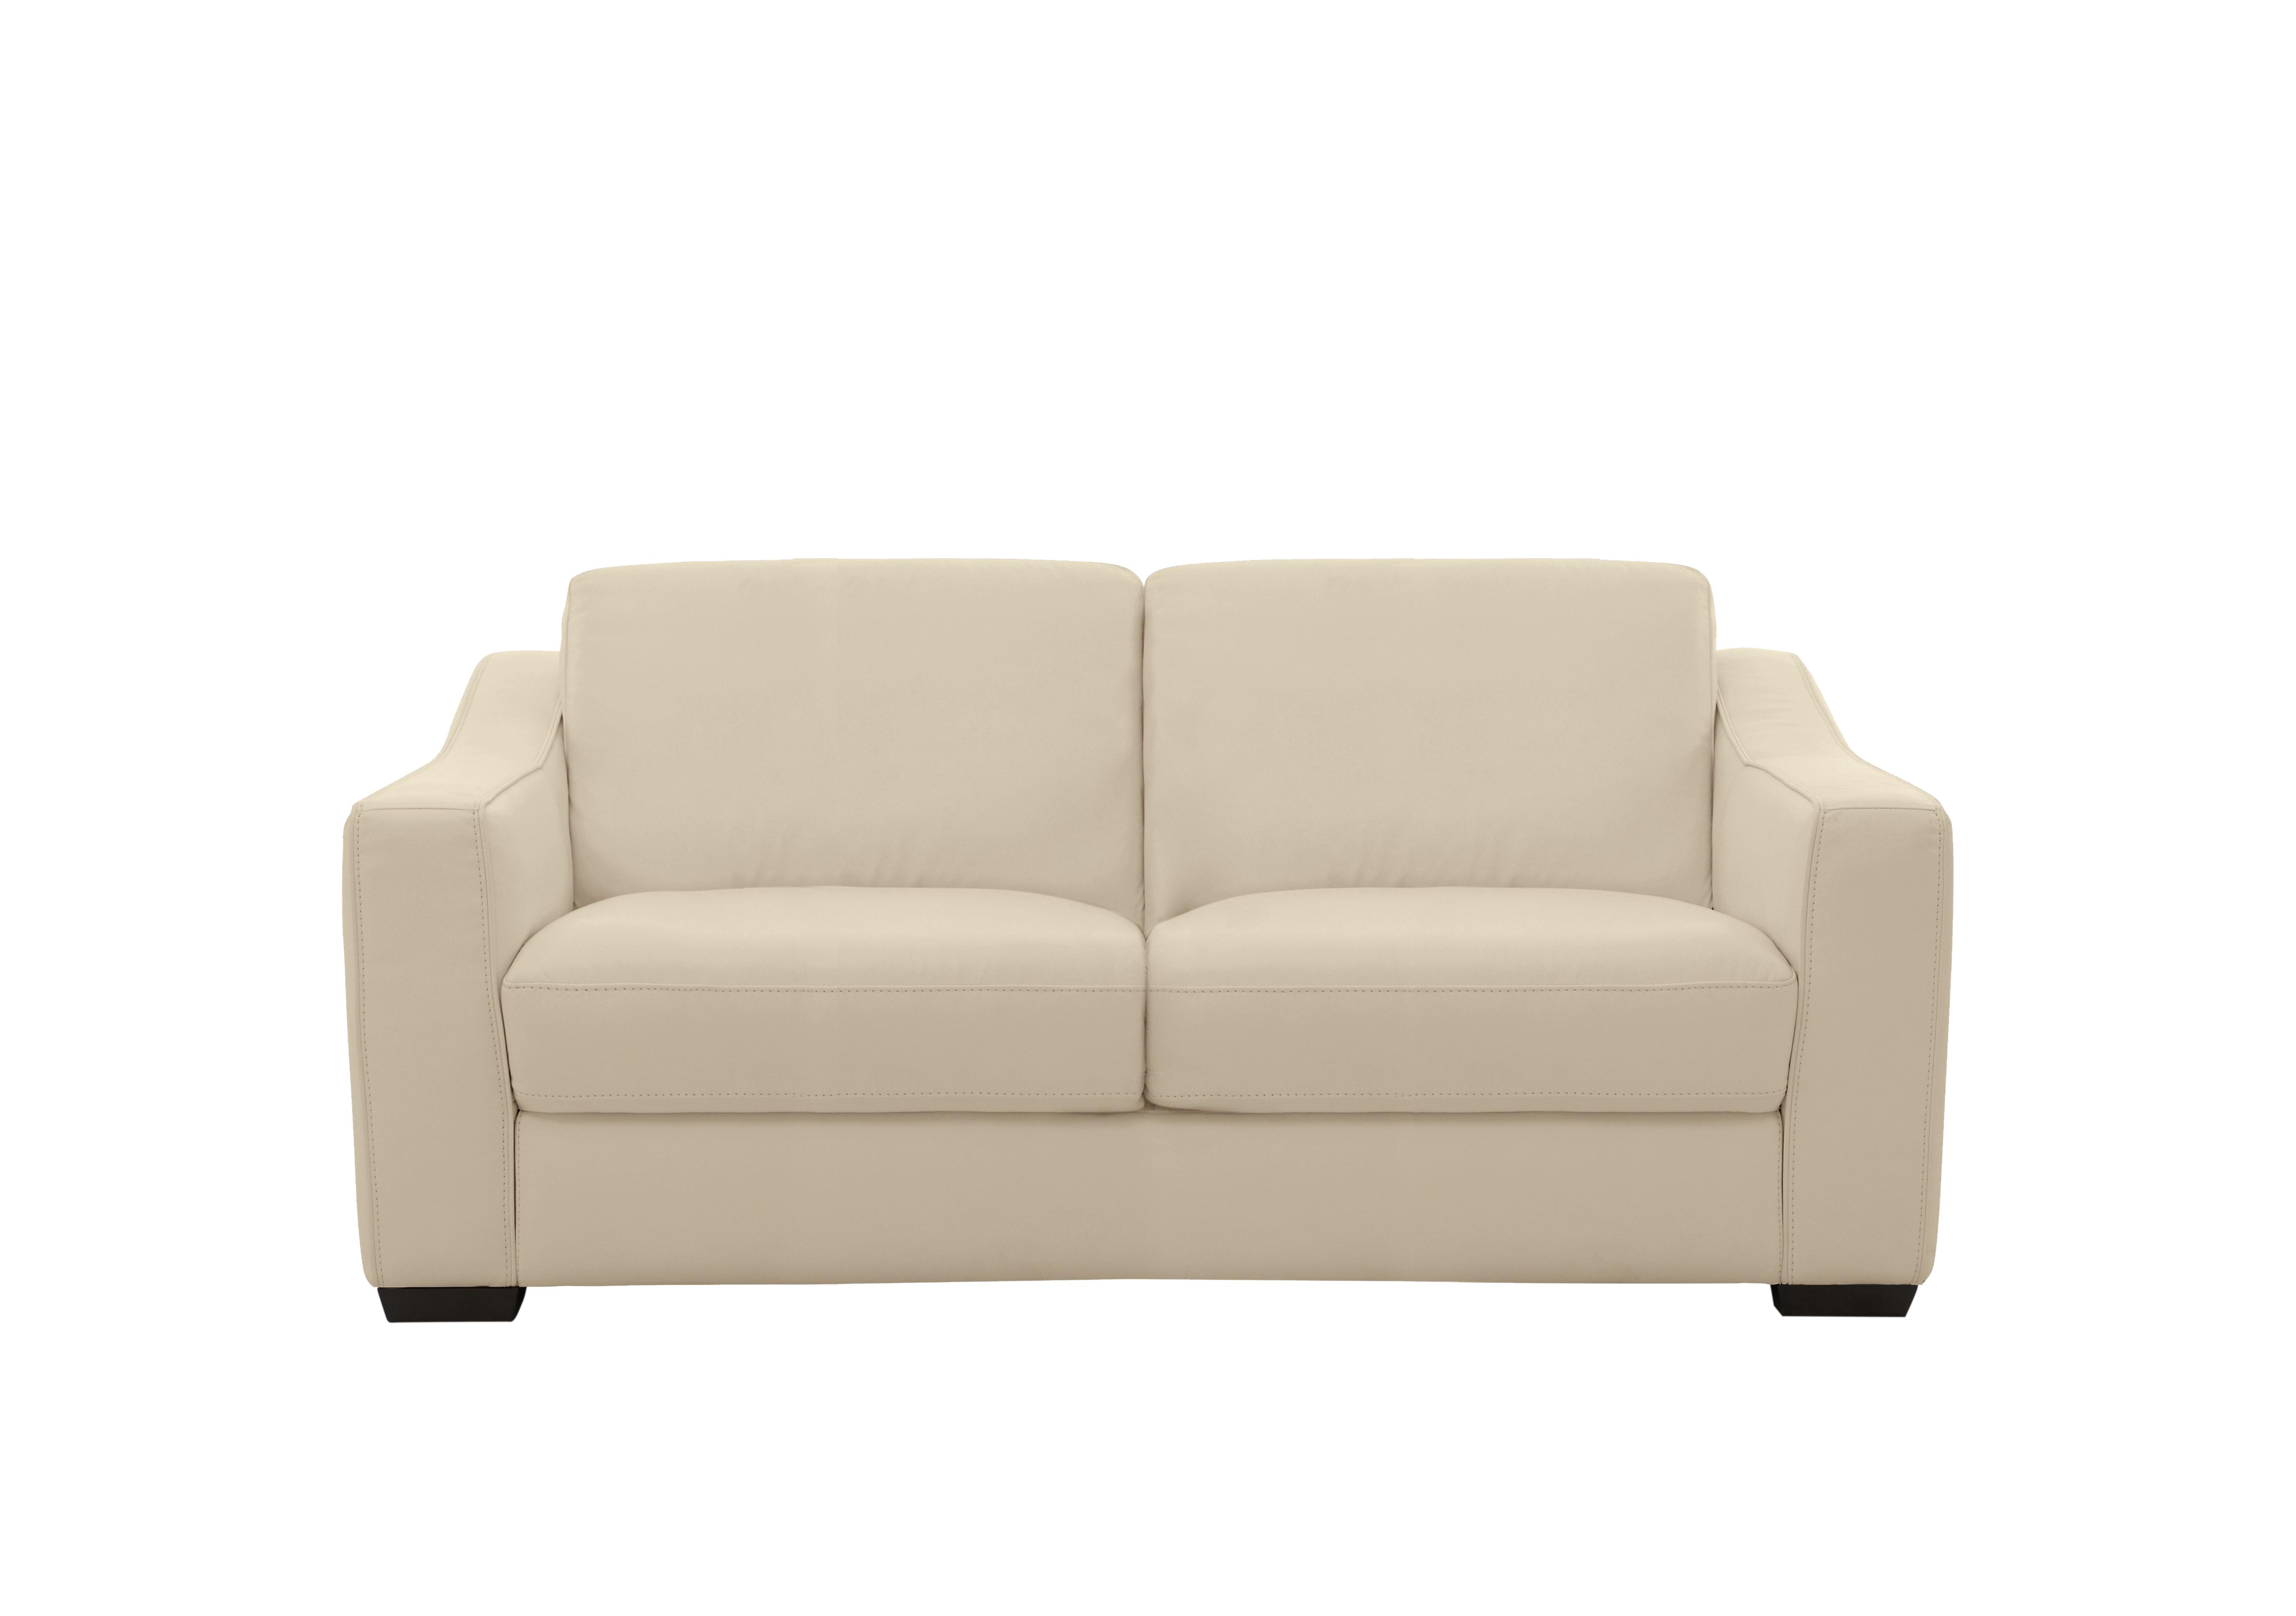 Optimus 2 Seater Leather Sofa in Bv-862c Bisque on Furniture Village